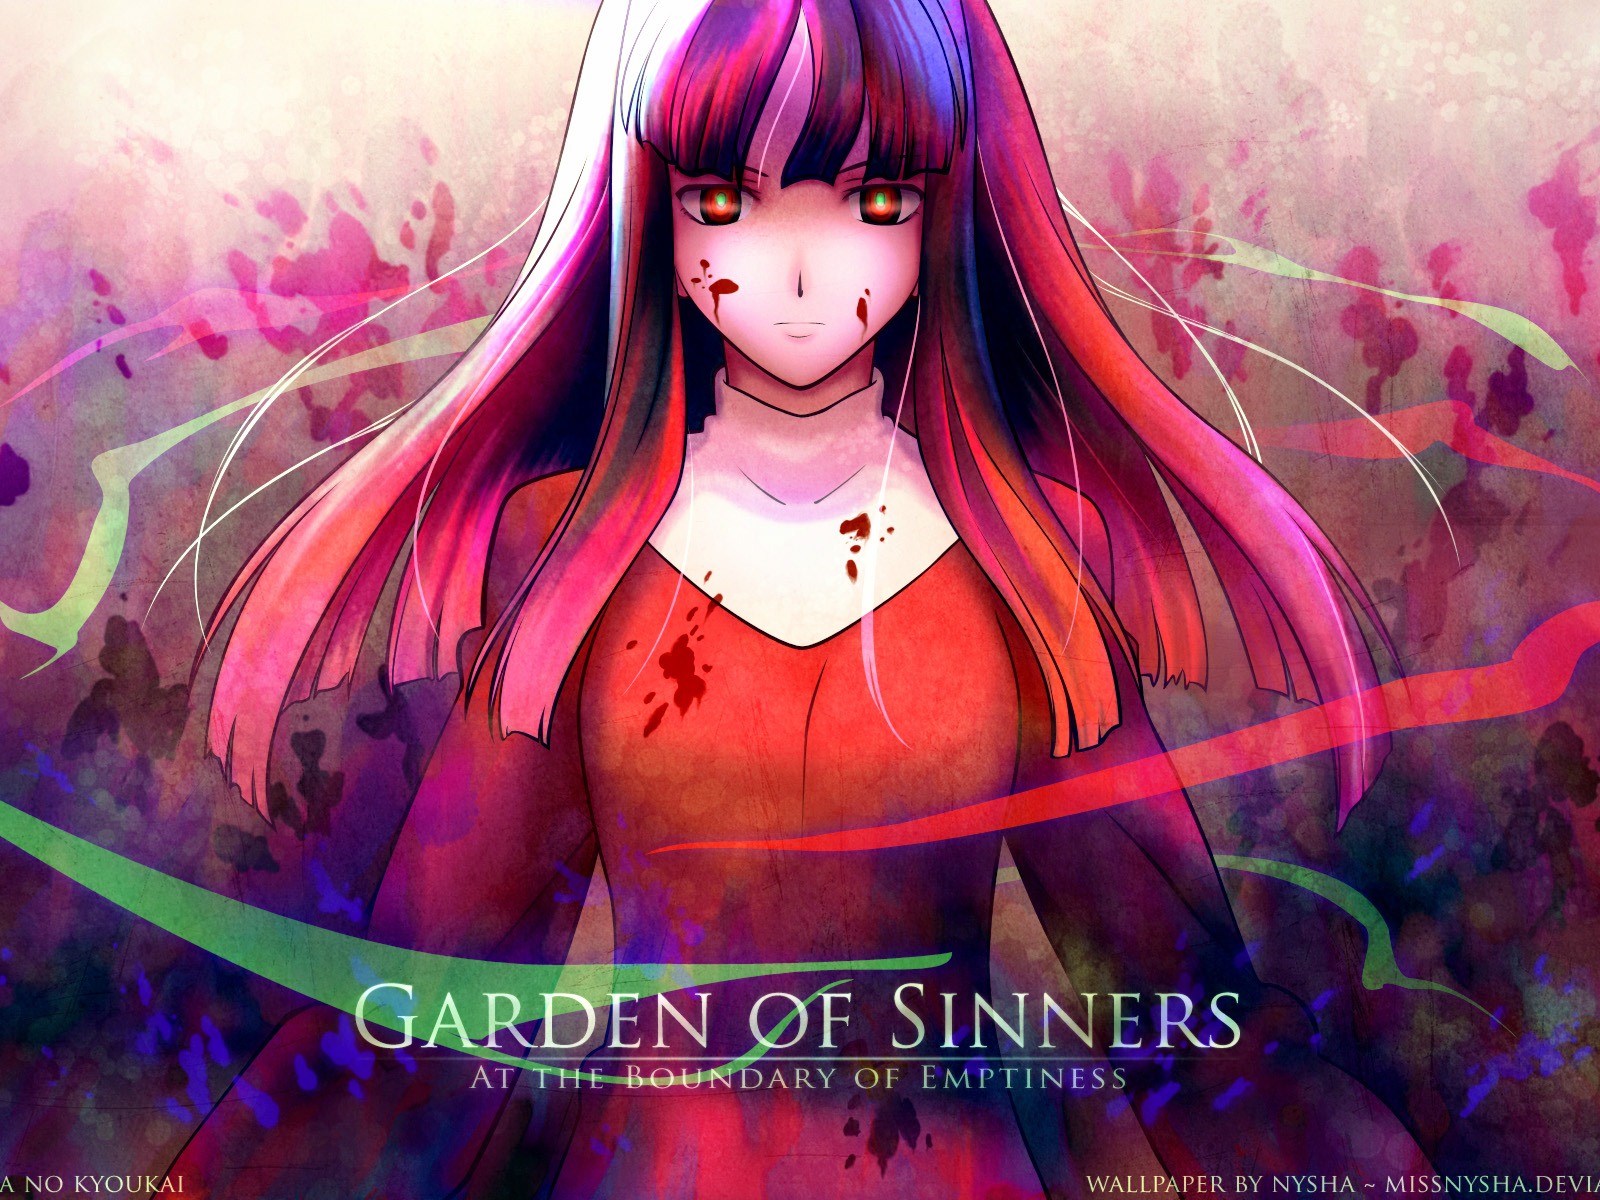 the Garden of sinners HD wallpapers #1 - 1600x1200